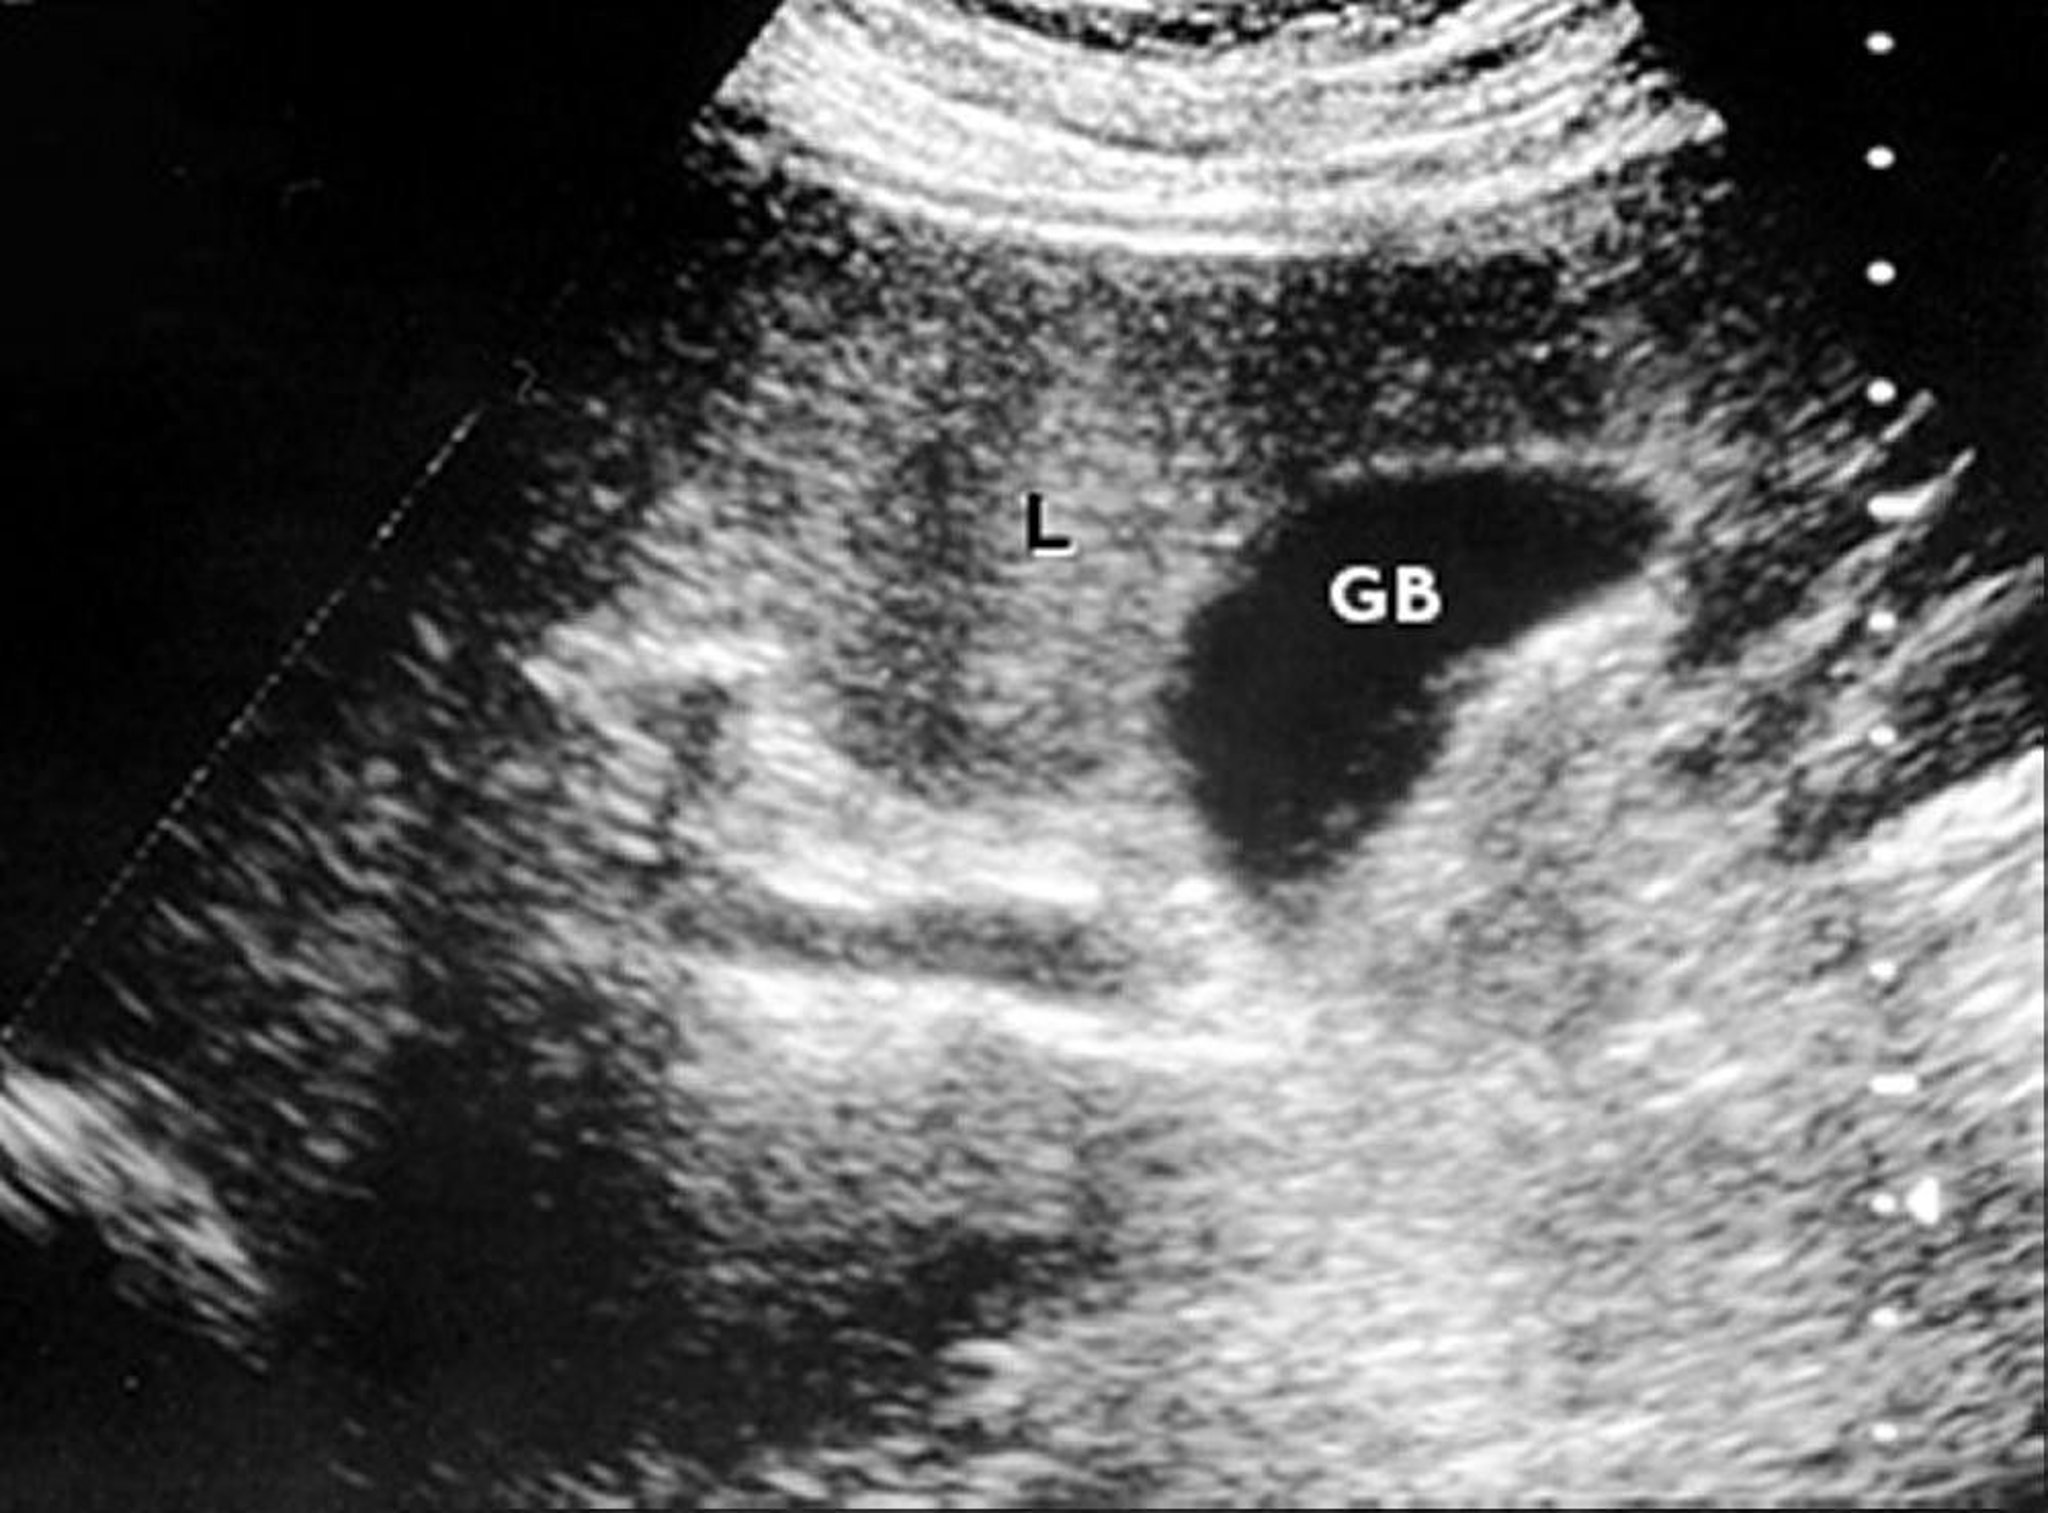 Ultrasound Scan of the Liver and Gallbladder